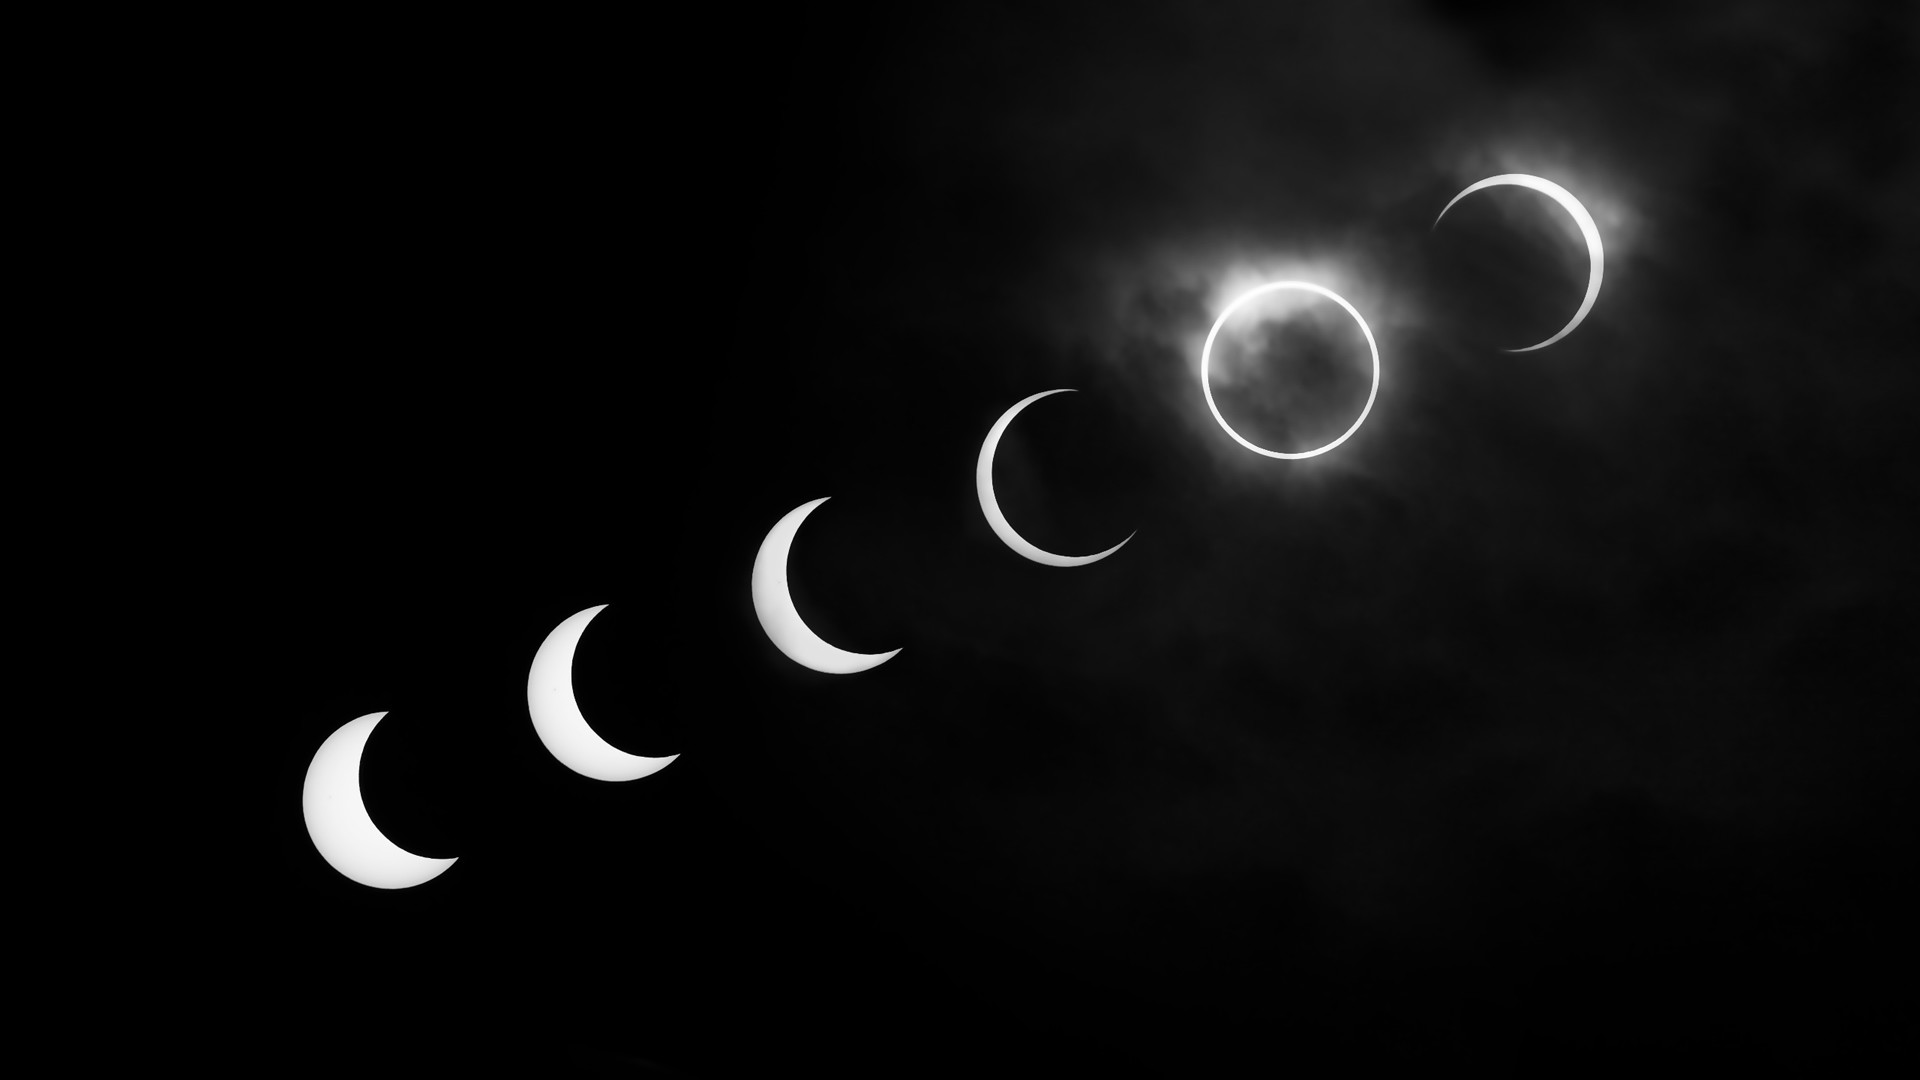 1920x1080 Solar eclipse black and white desktop wallpaper